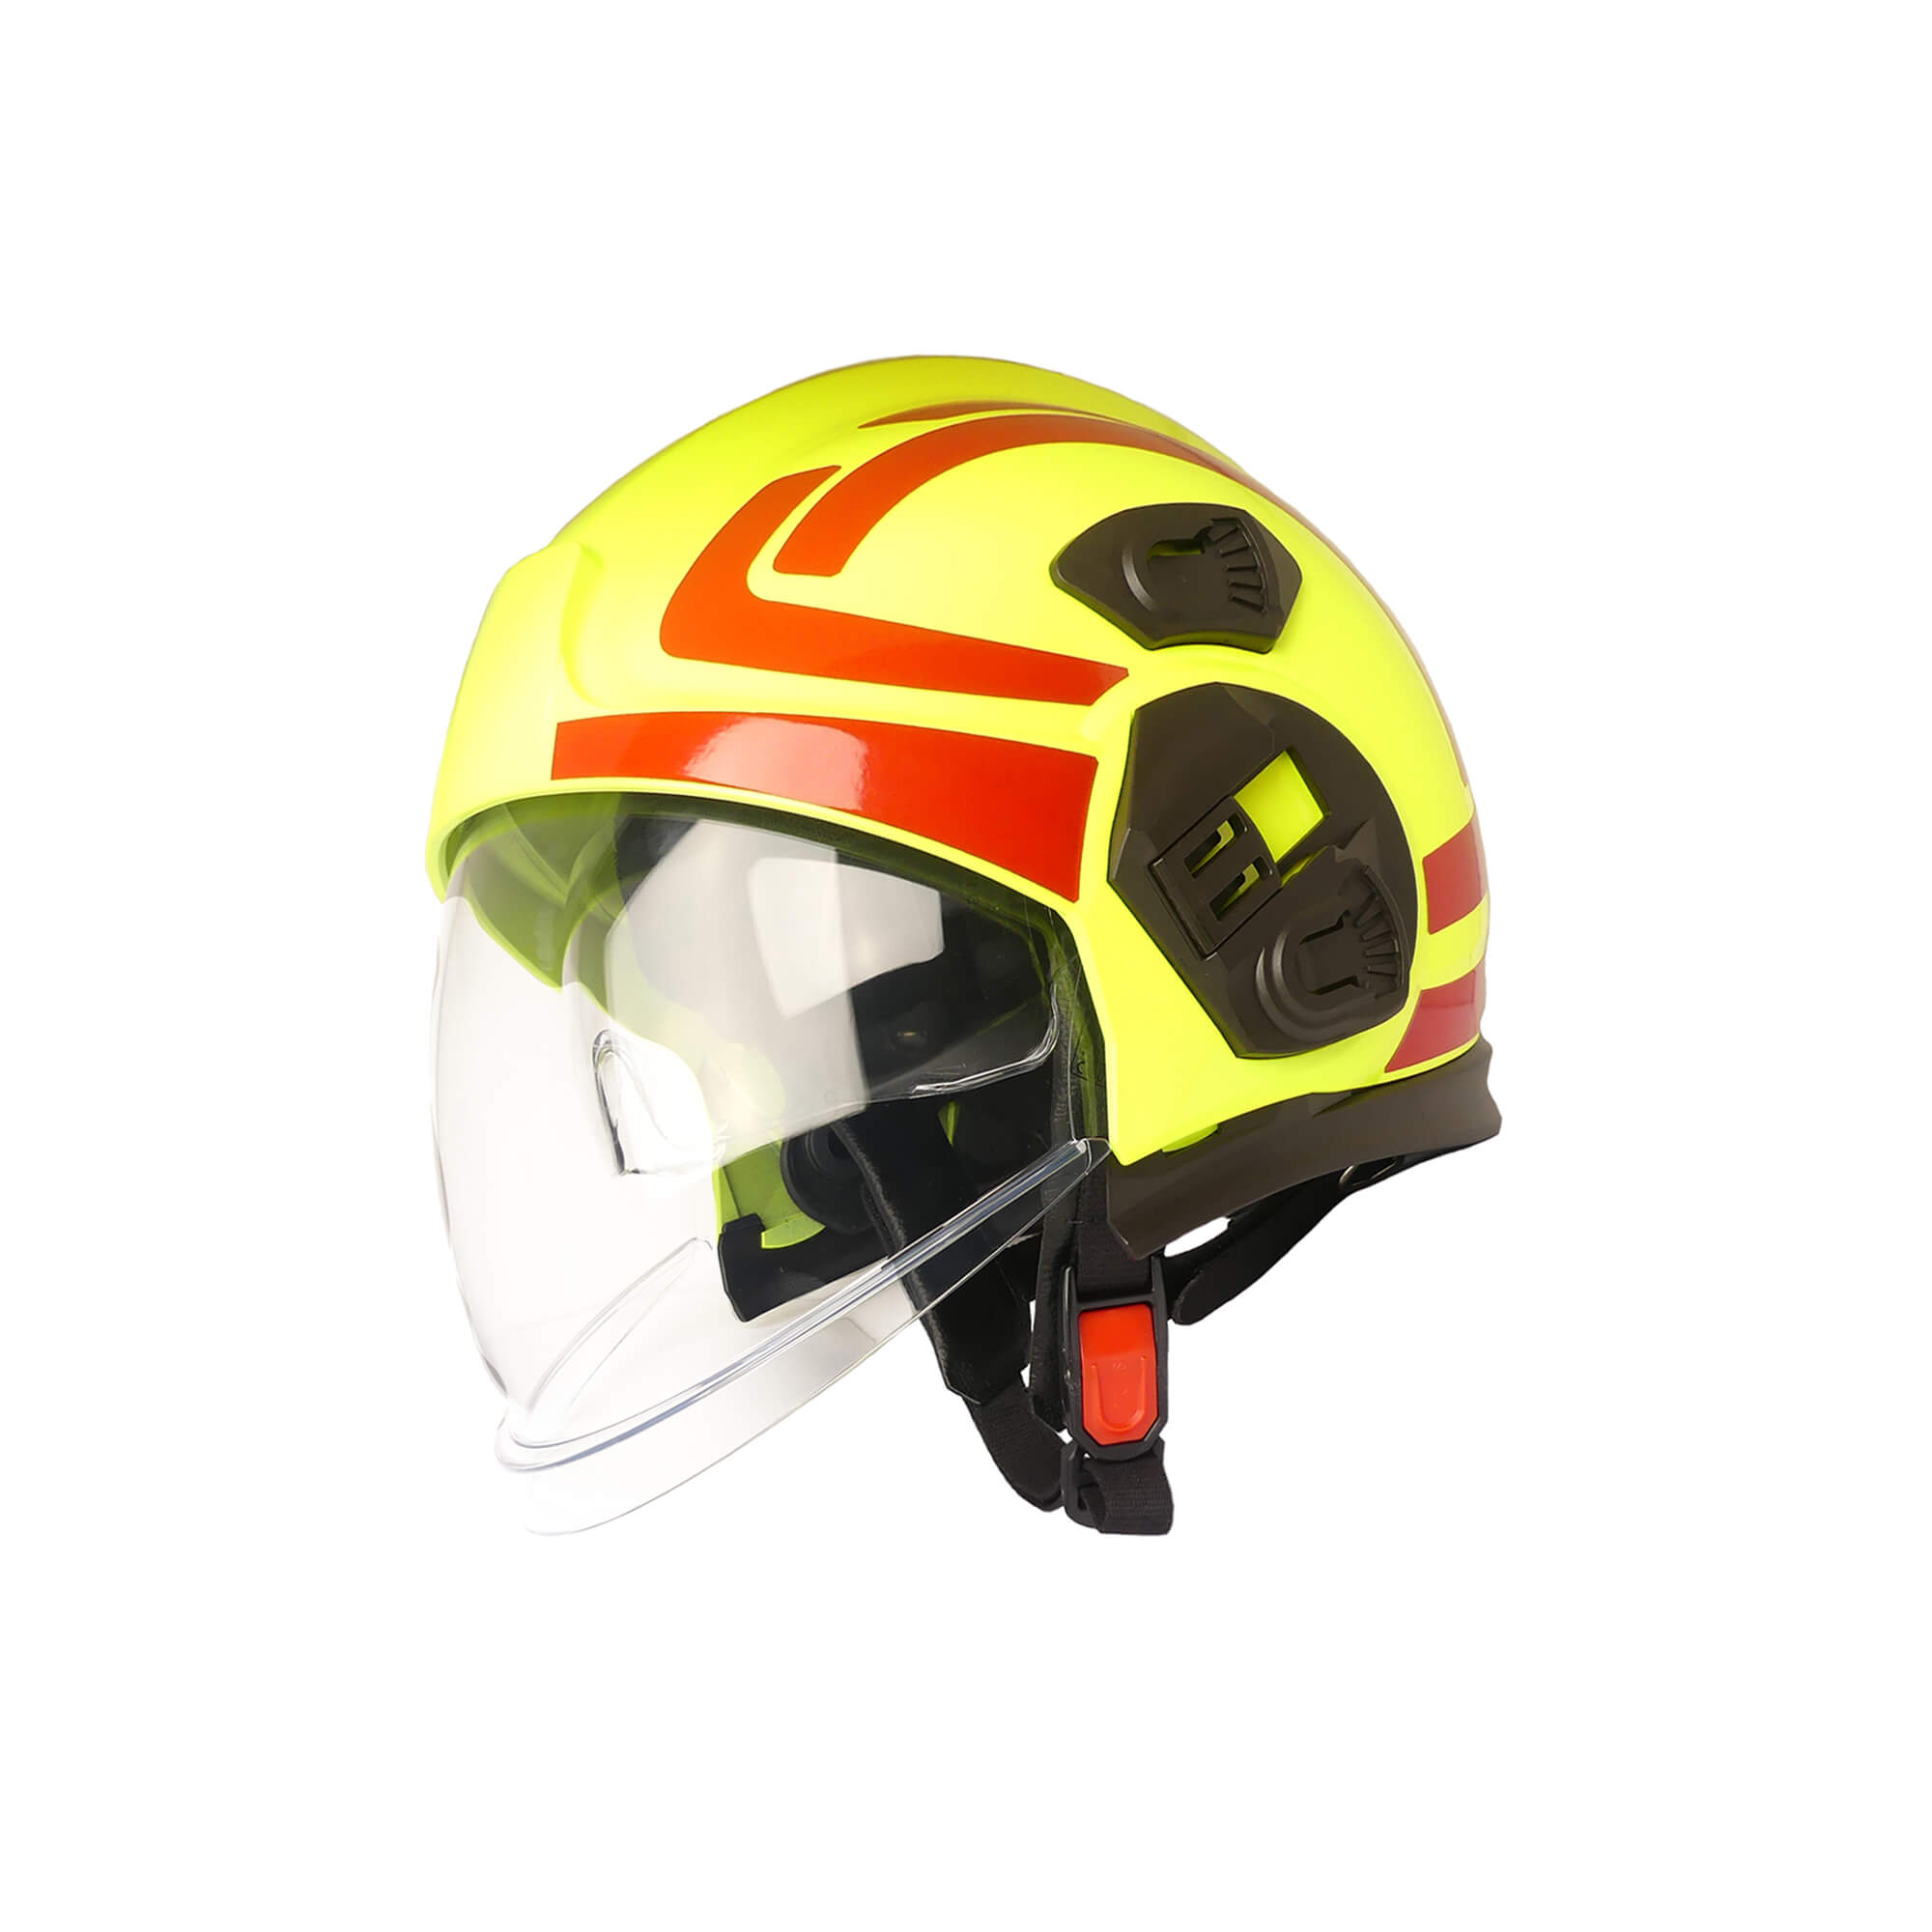 Firefighter helmet PAB Fire 05, High Visibility RR